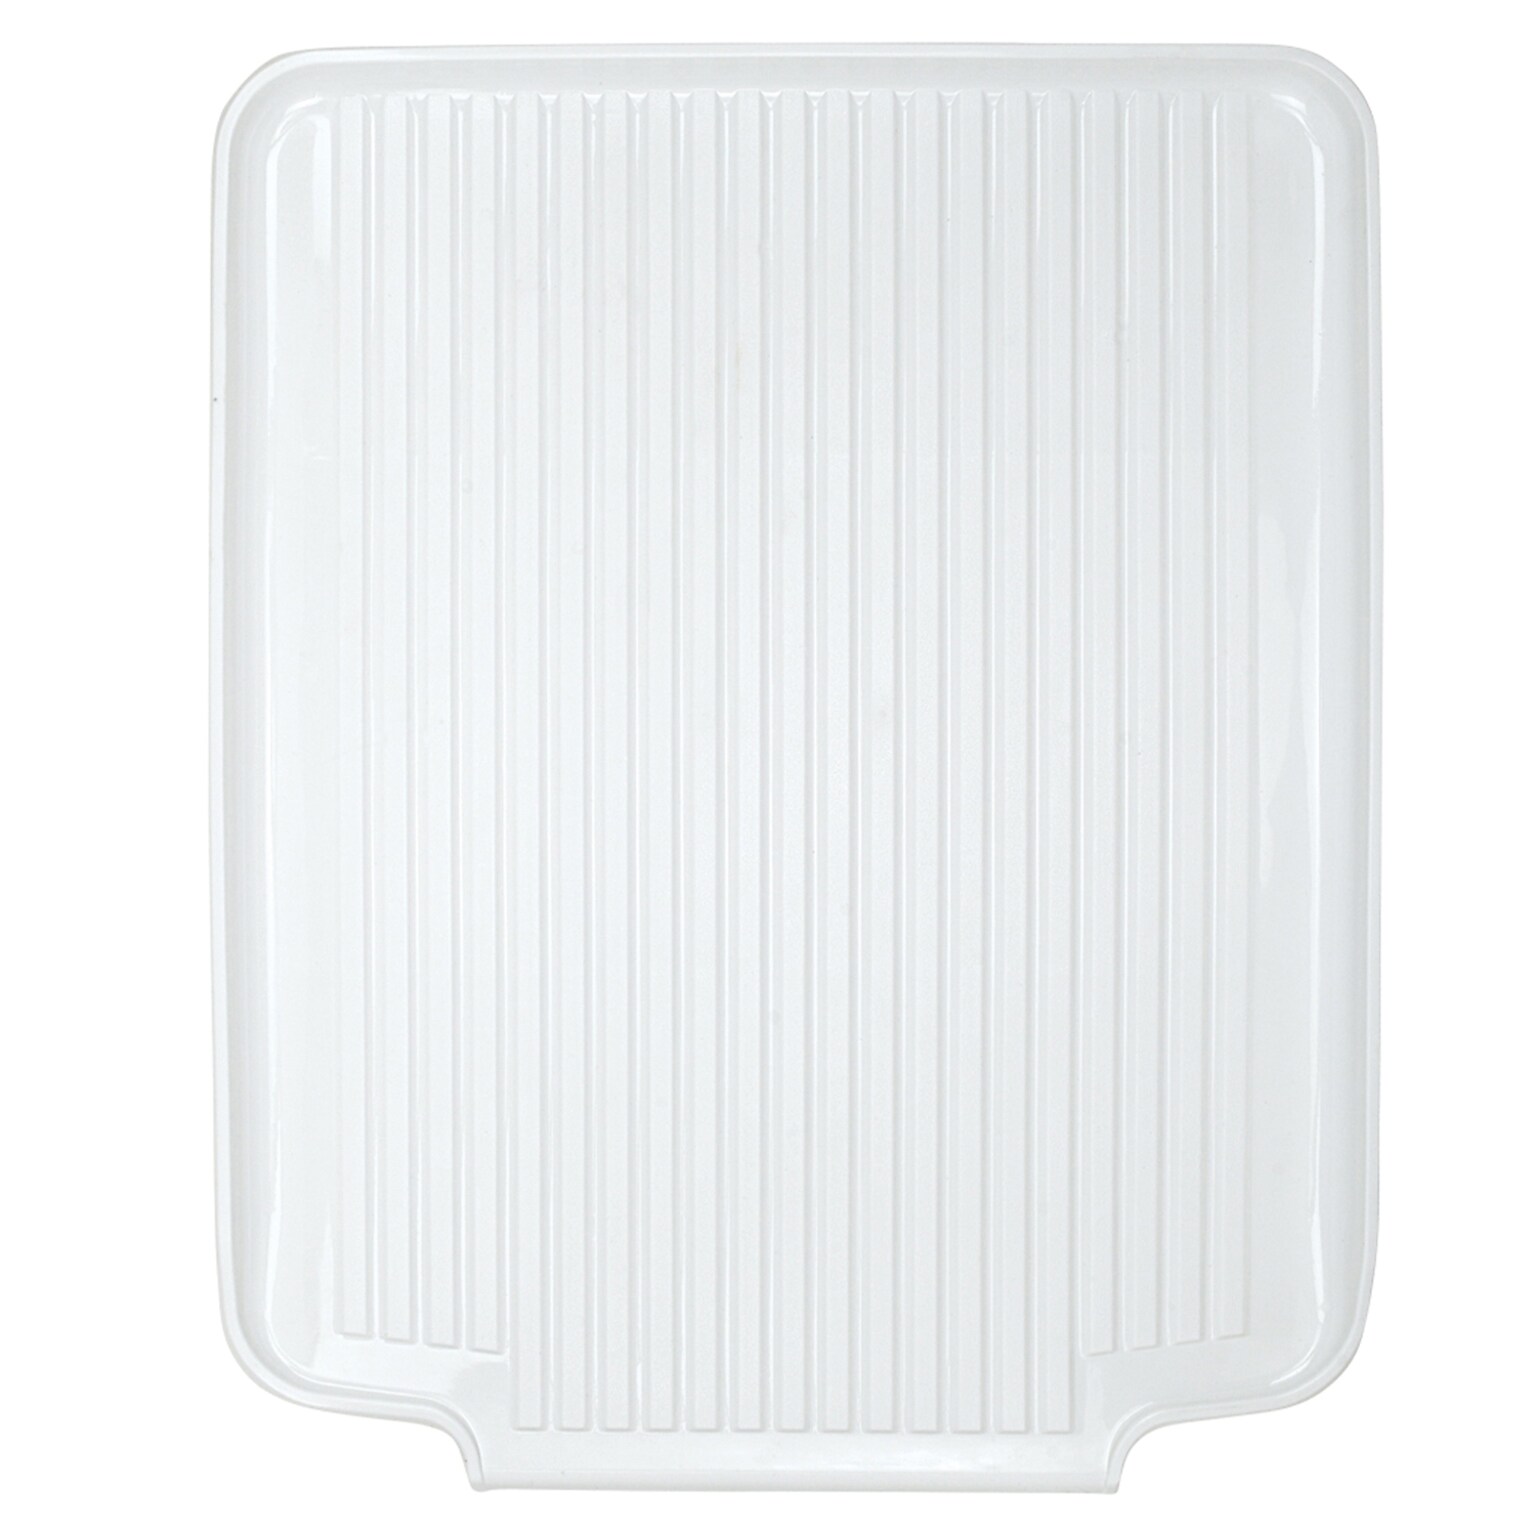 Better Houseware PE Plastic Dish Drain Board, Clear (1480.9)